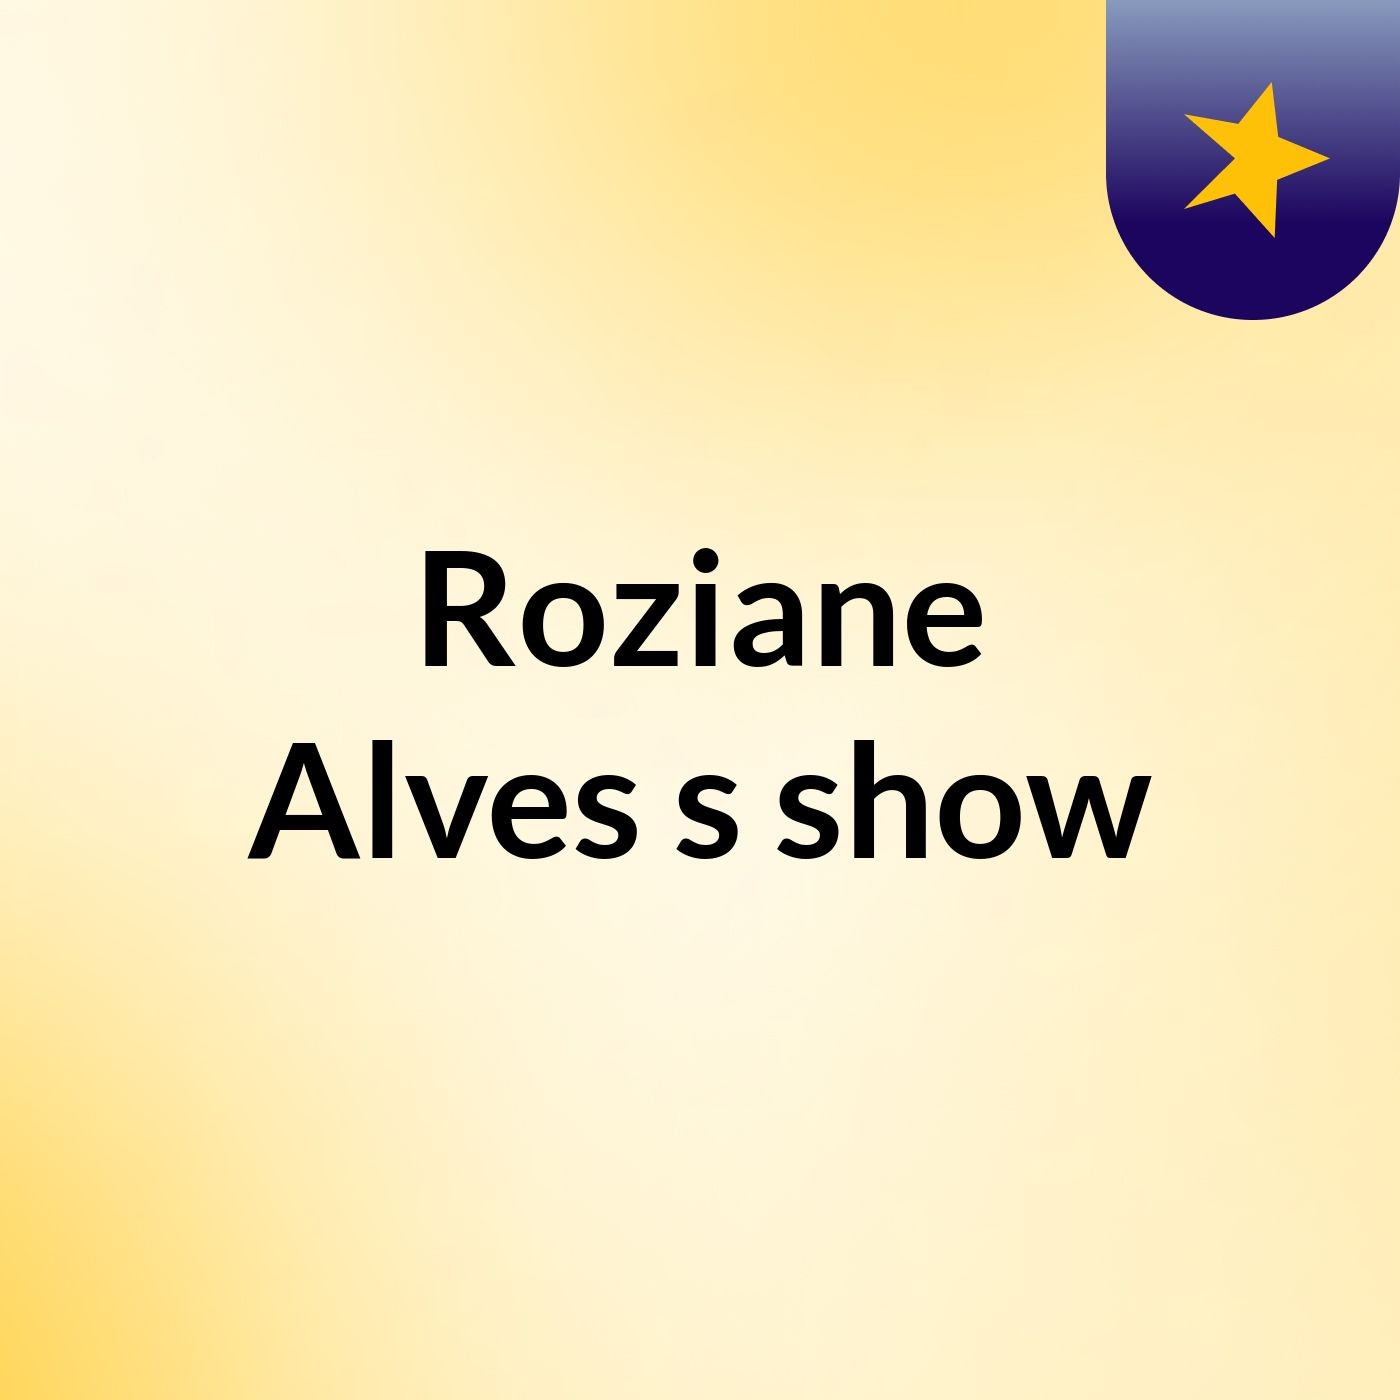 Roziane Alves's show